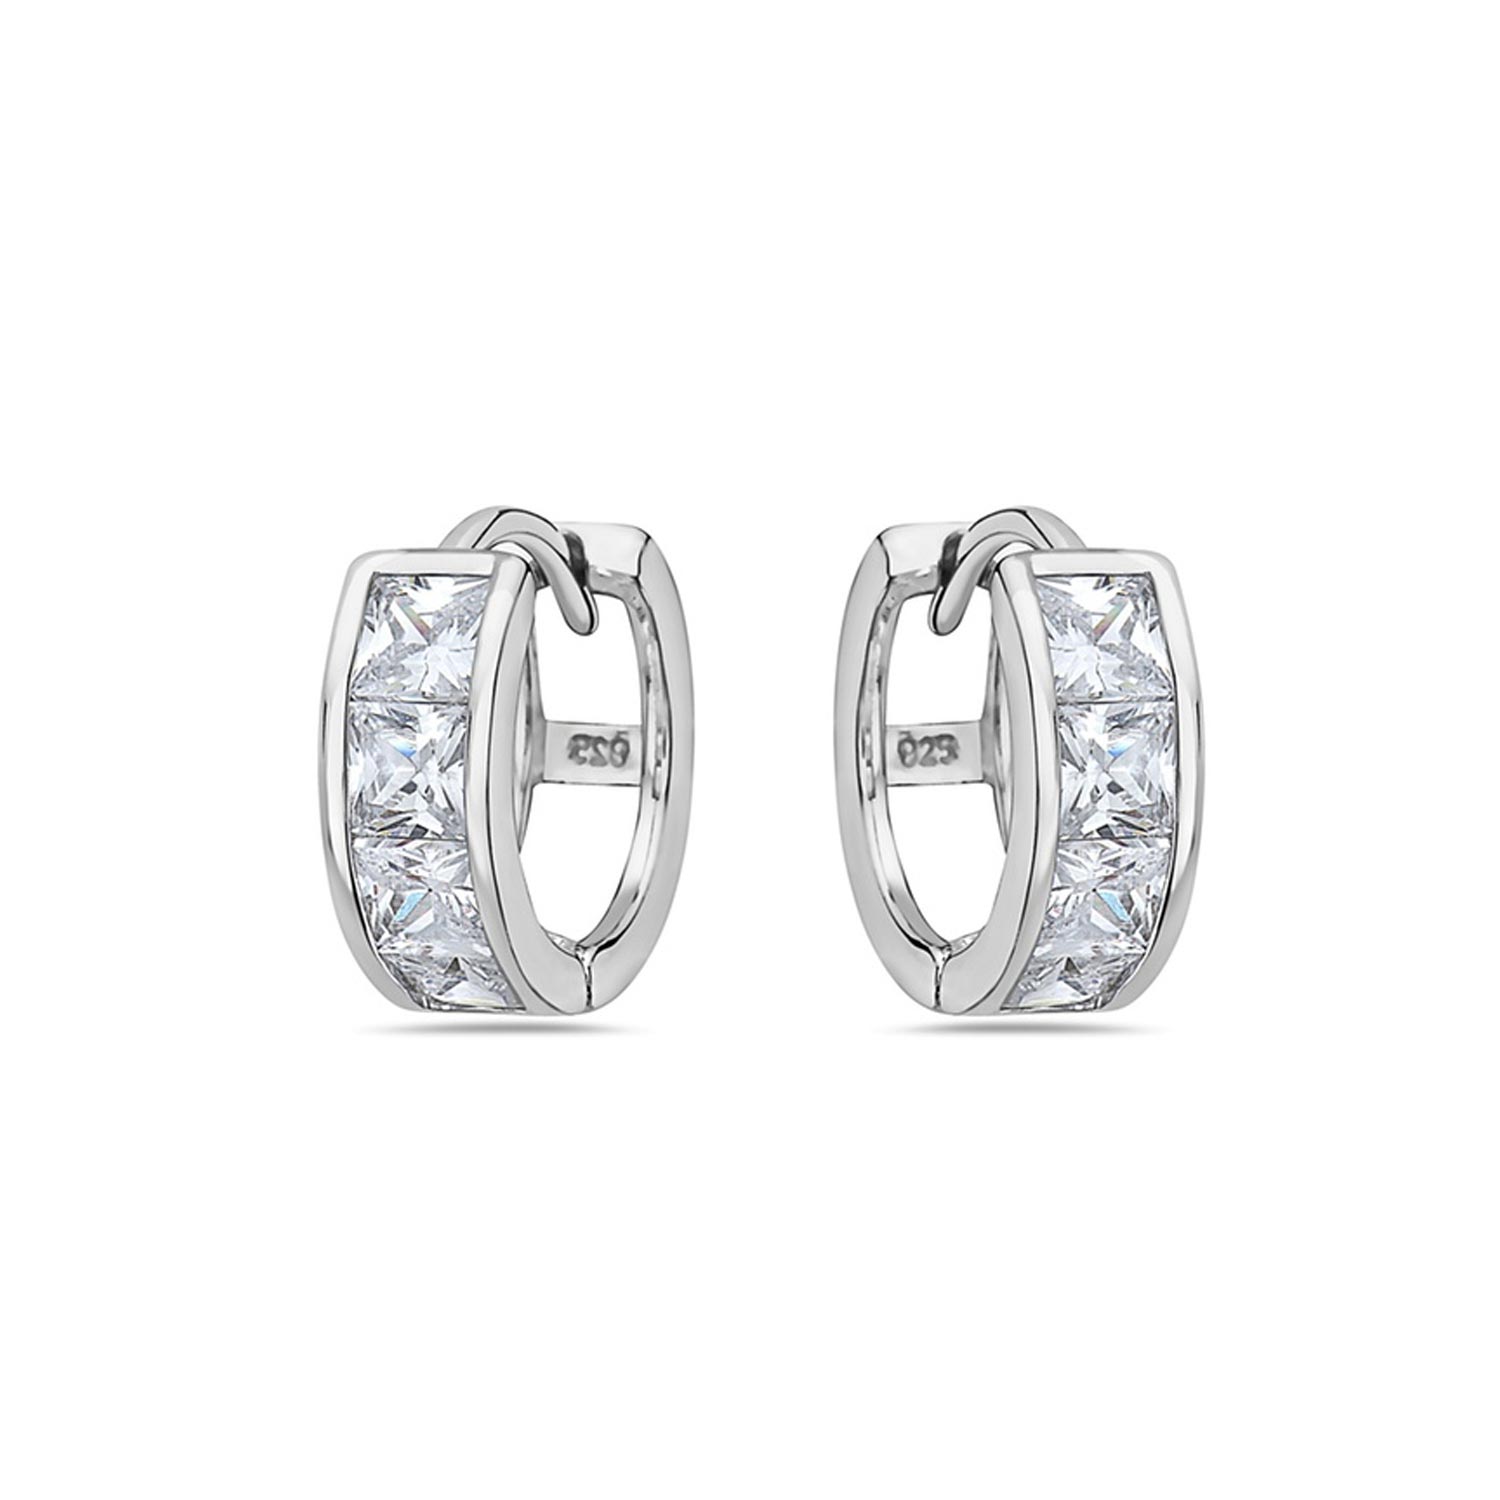 Sterling Silver Crystal Huggie Earrings with Swarovski Elements